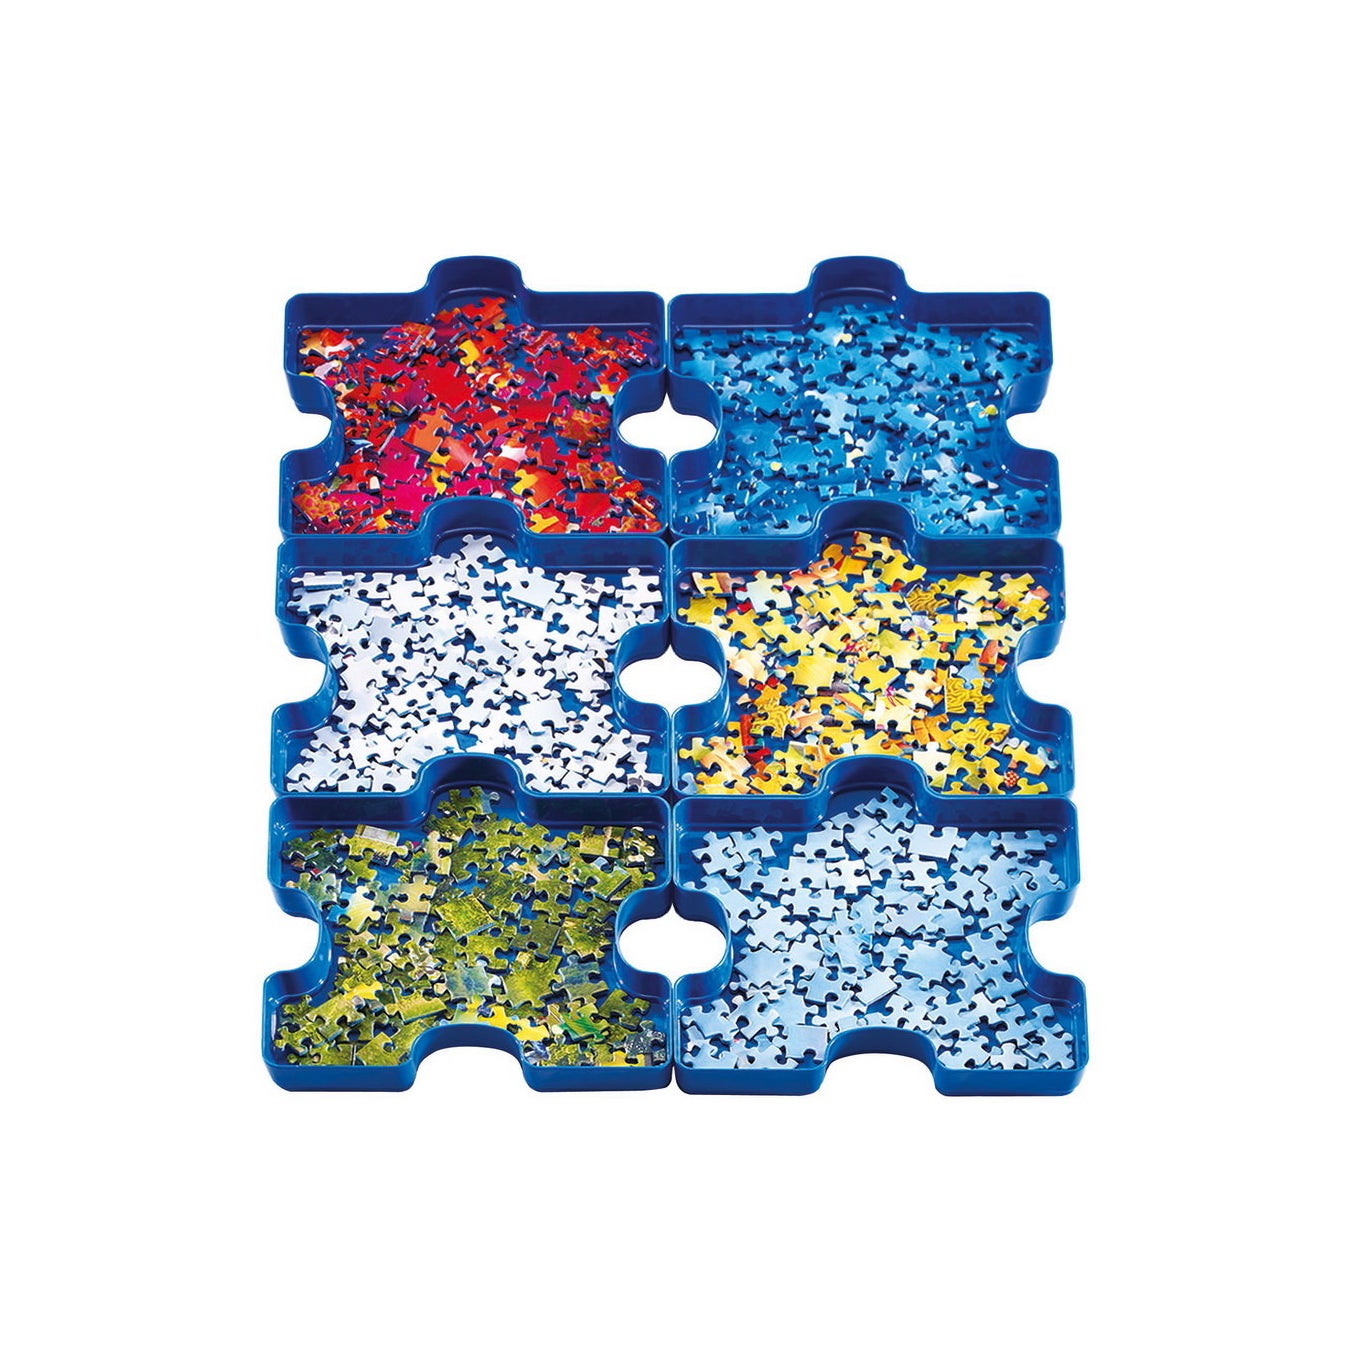 Tavite pentru sortat puzzle - Sort Your Puzzle, 300-1000 piese | Ravensburger